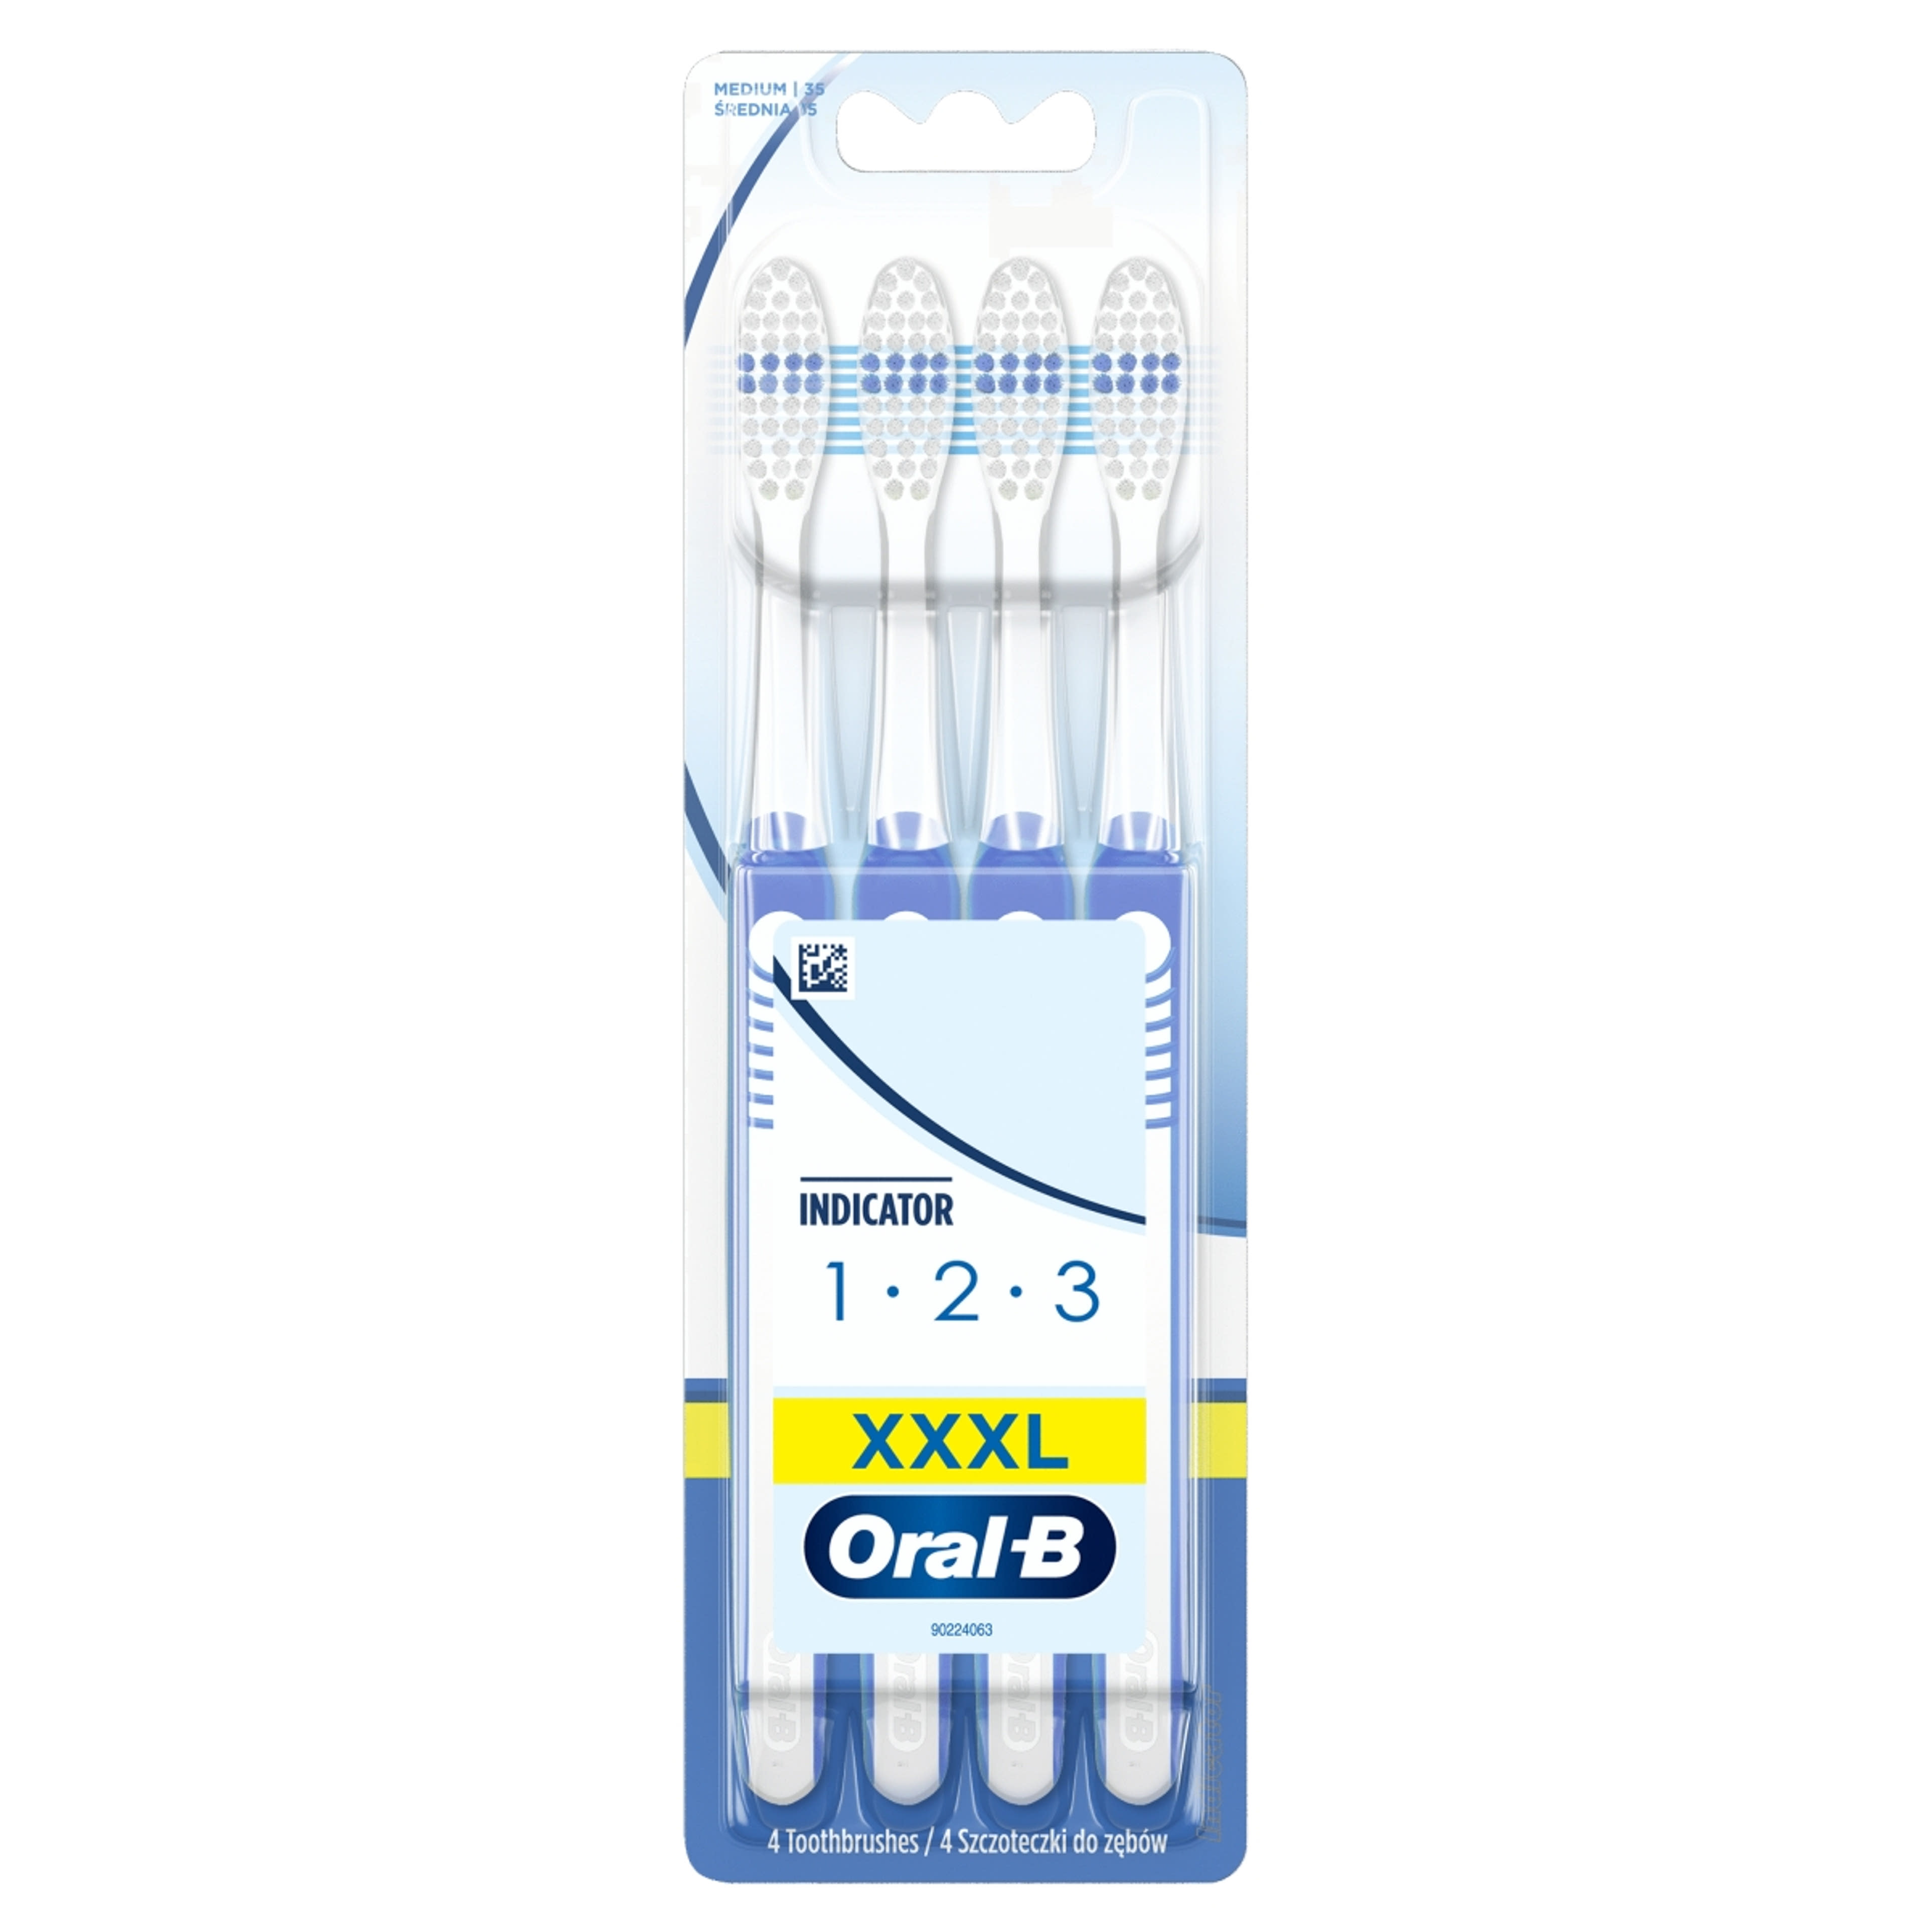 Oral-B 123 Indicator medium fogkefe - 4 db